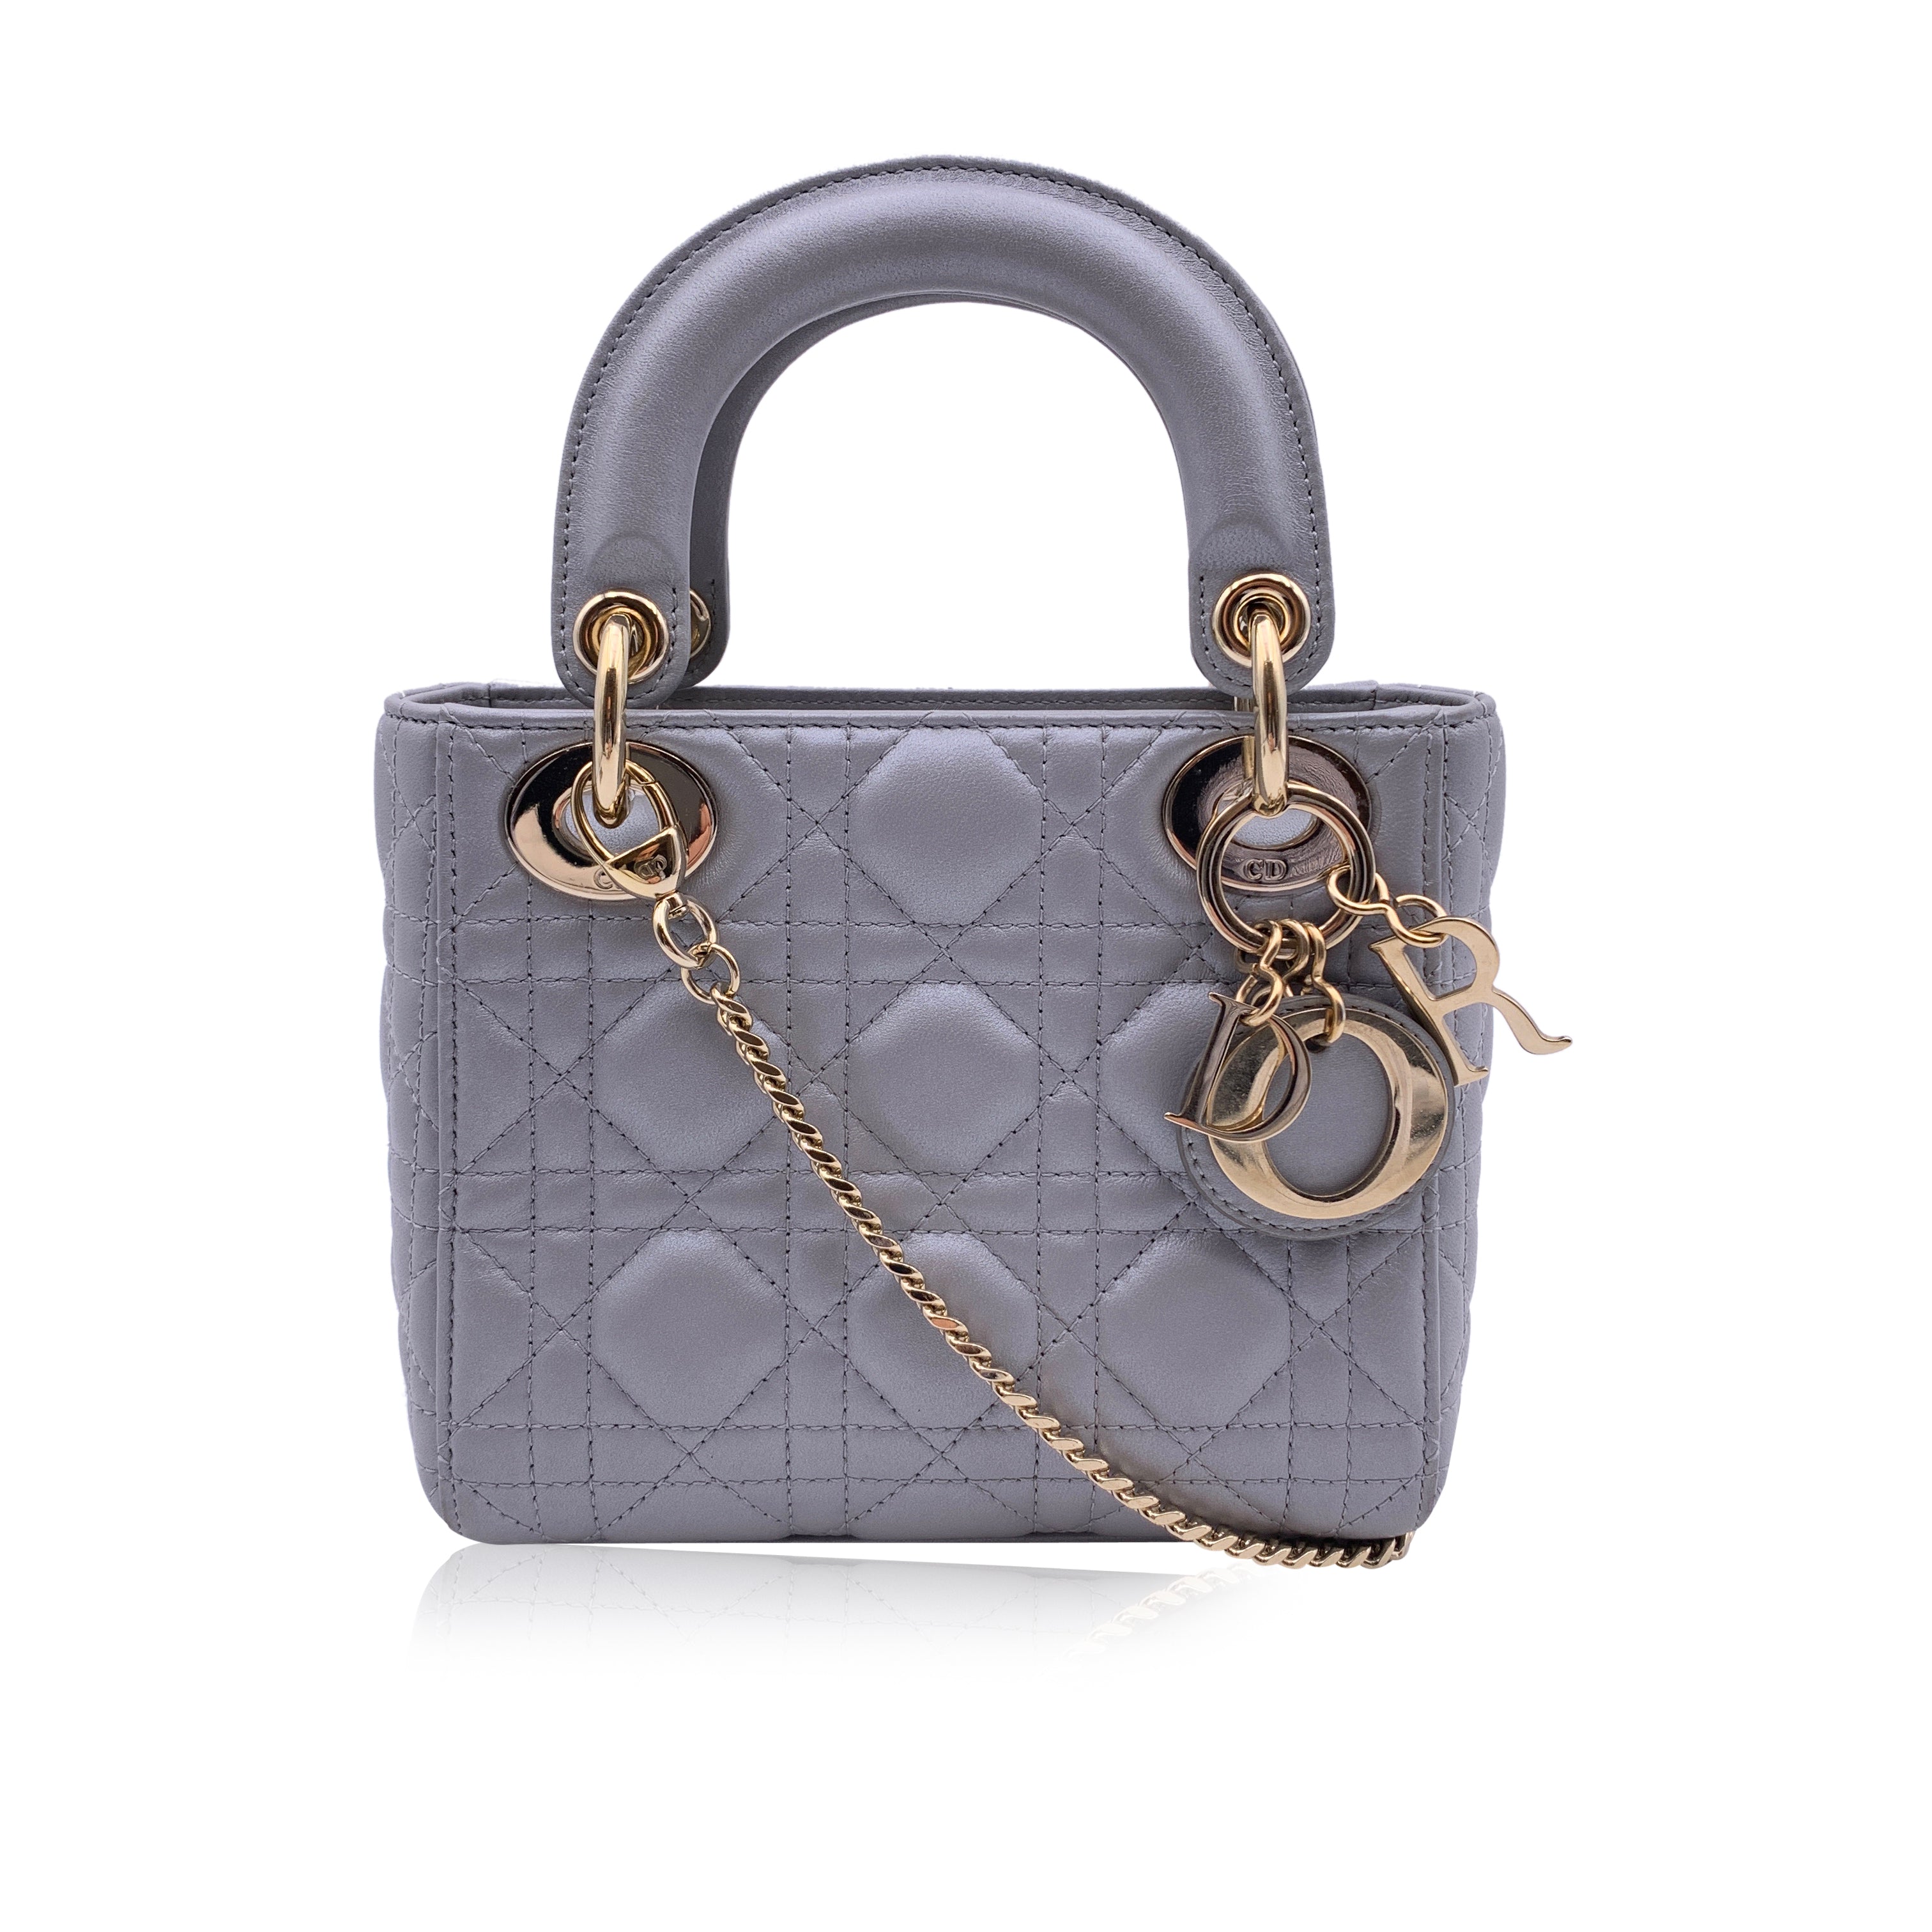 CHRISTIAN DIOR Handbags Lady Dior